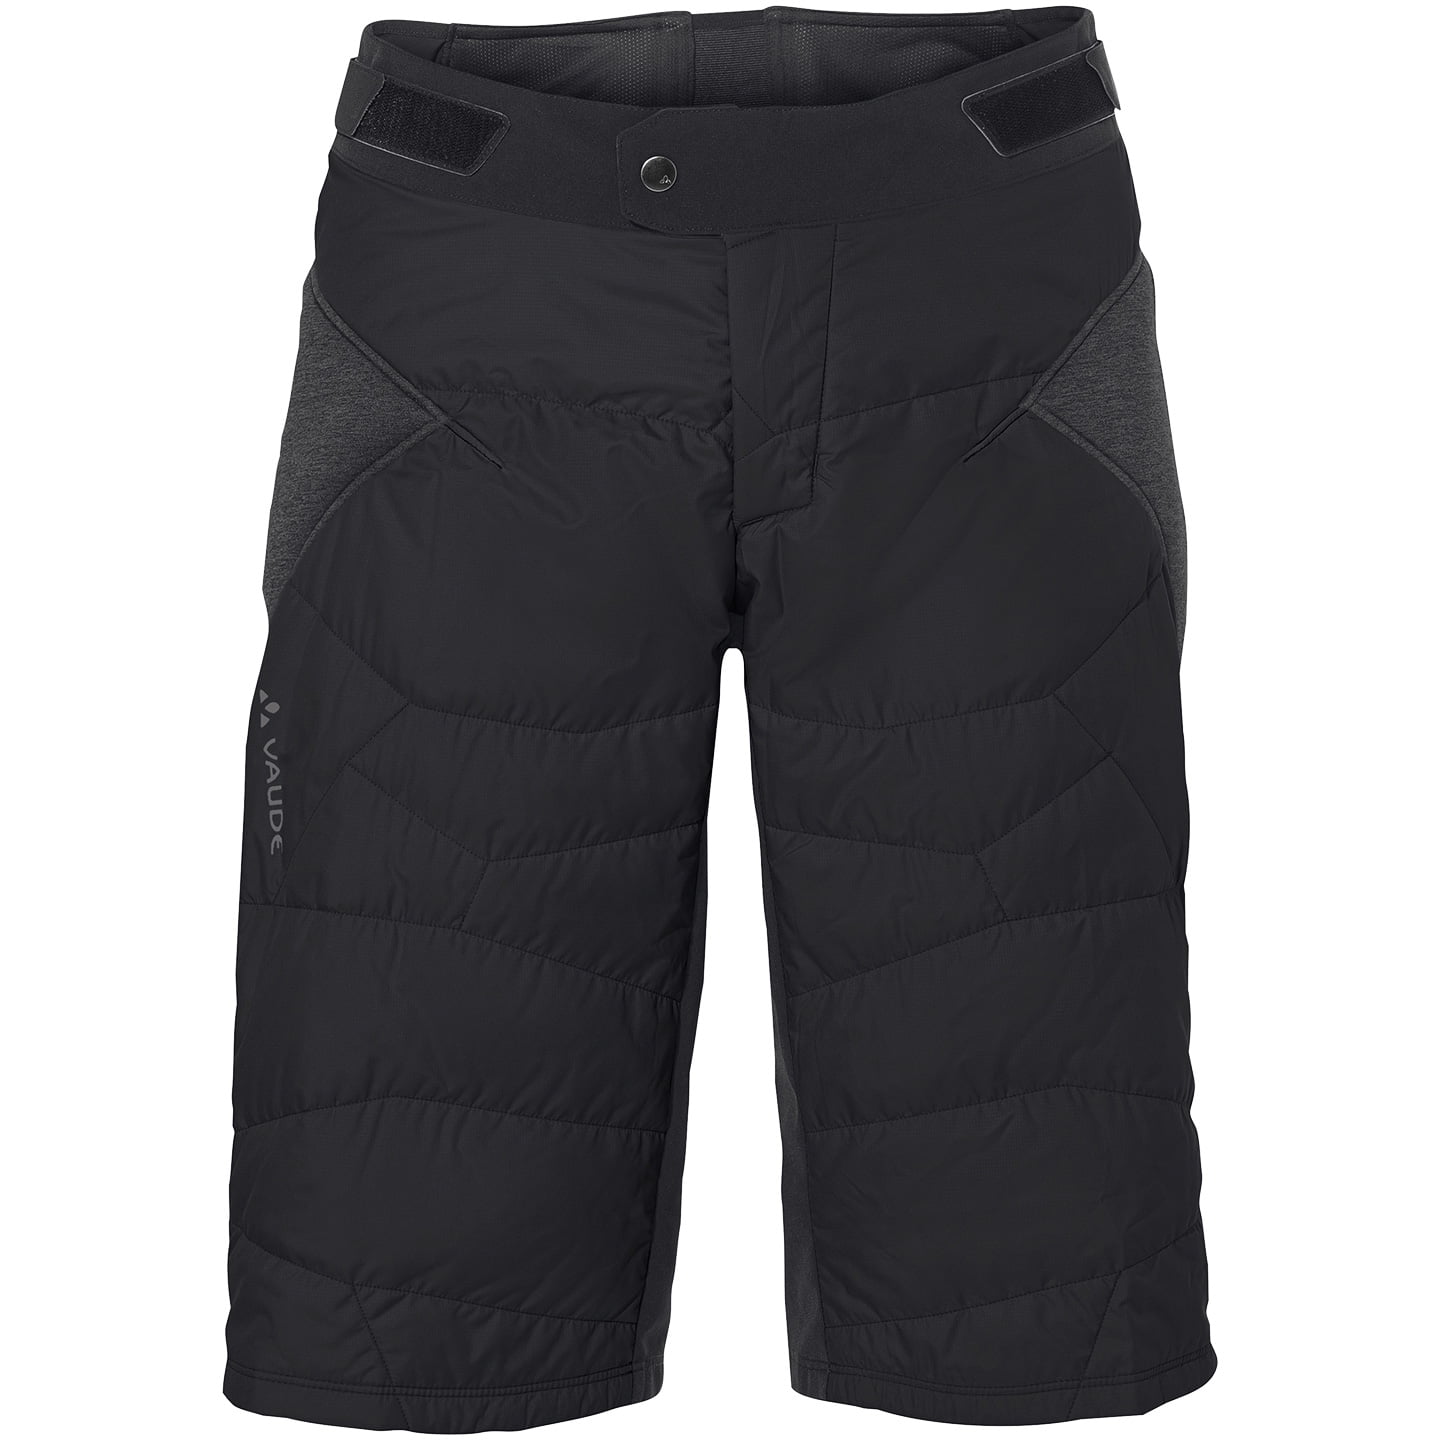 VAUDE Minaki III w/o Pad Bike Shorts, for men, size XL, MTB shorts, MTB clothing